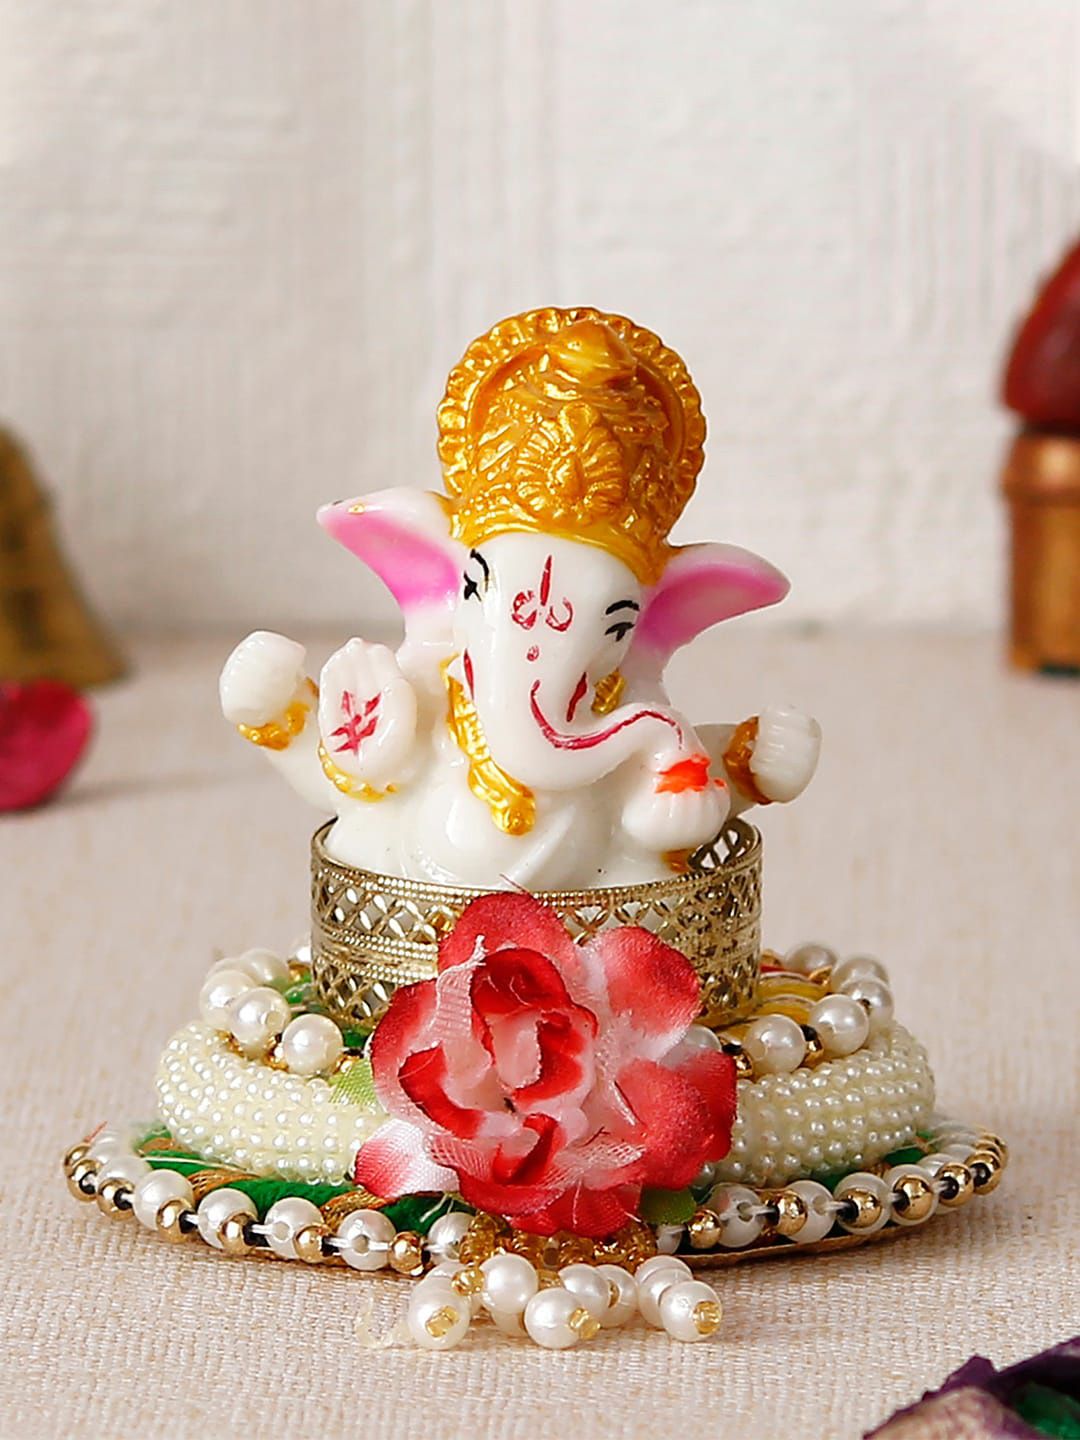 eCraftIndia White & Gold-Toned Lord Ganesha Idol Showpiece Price in India